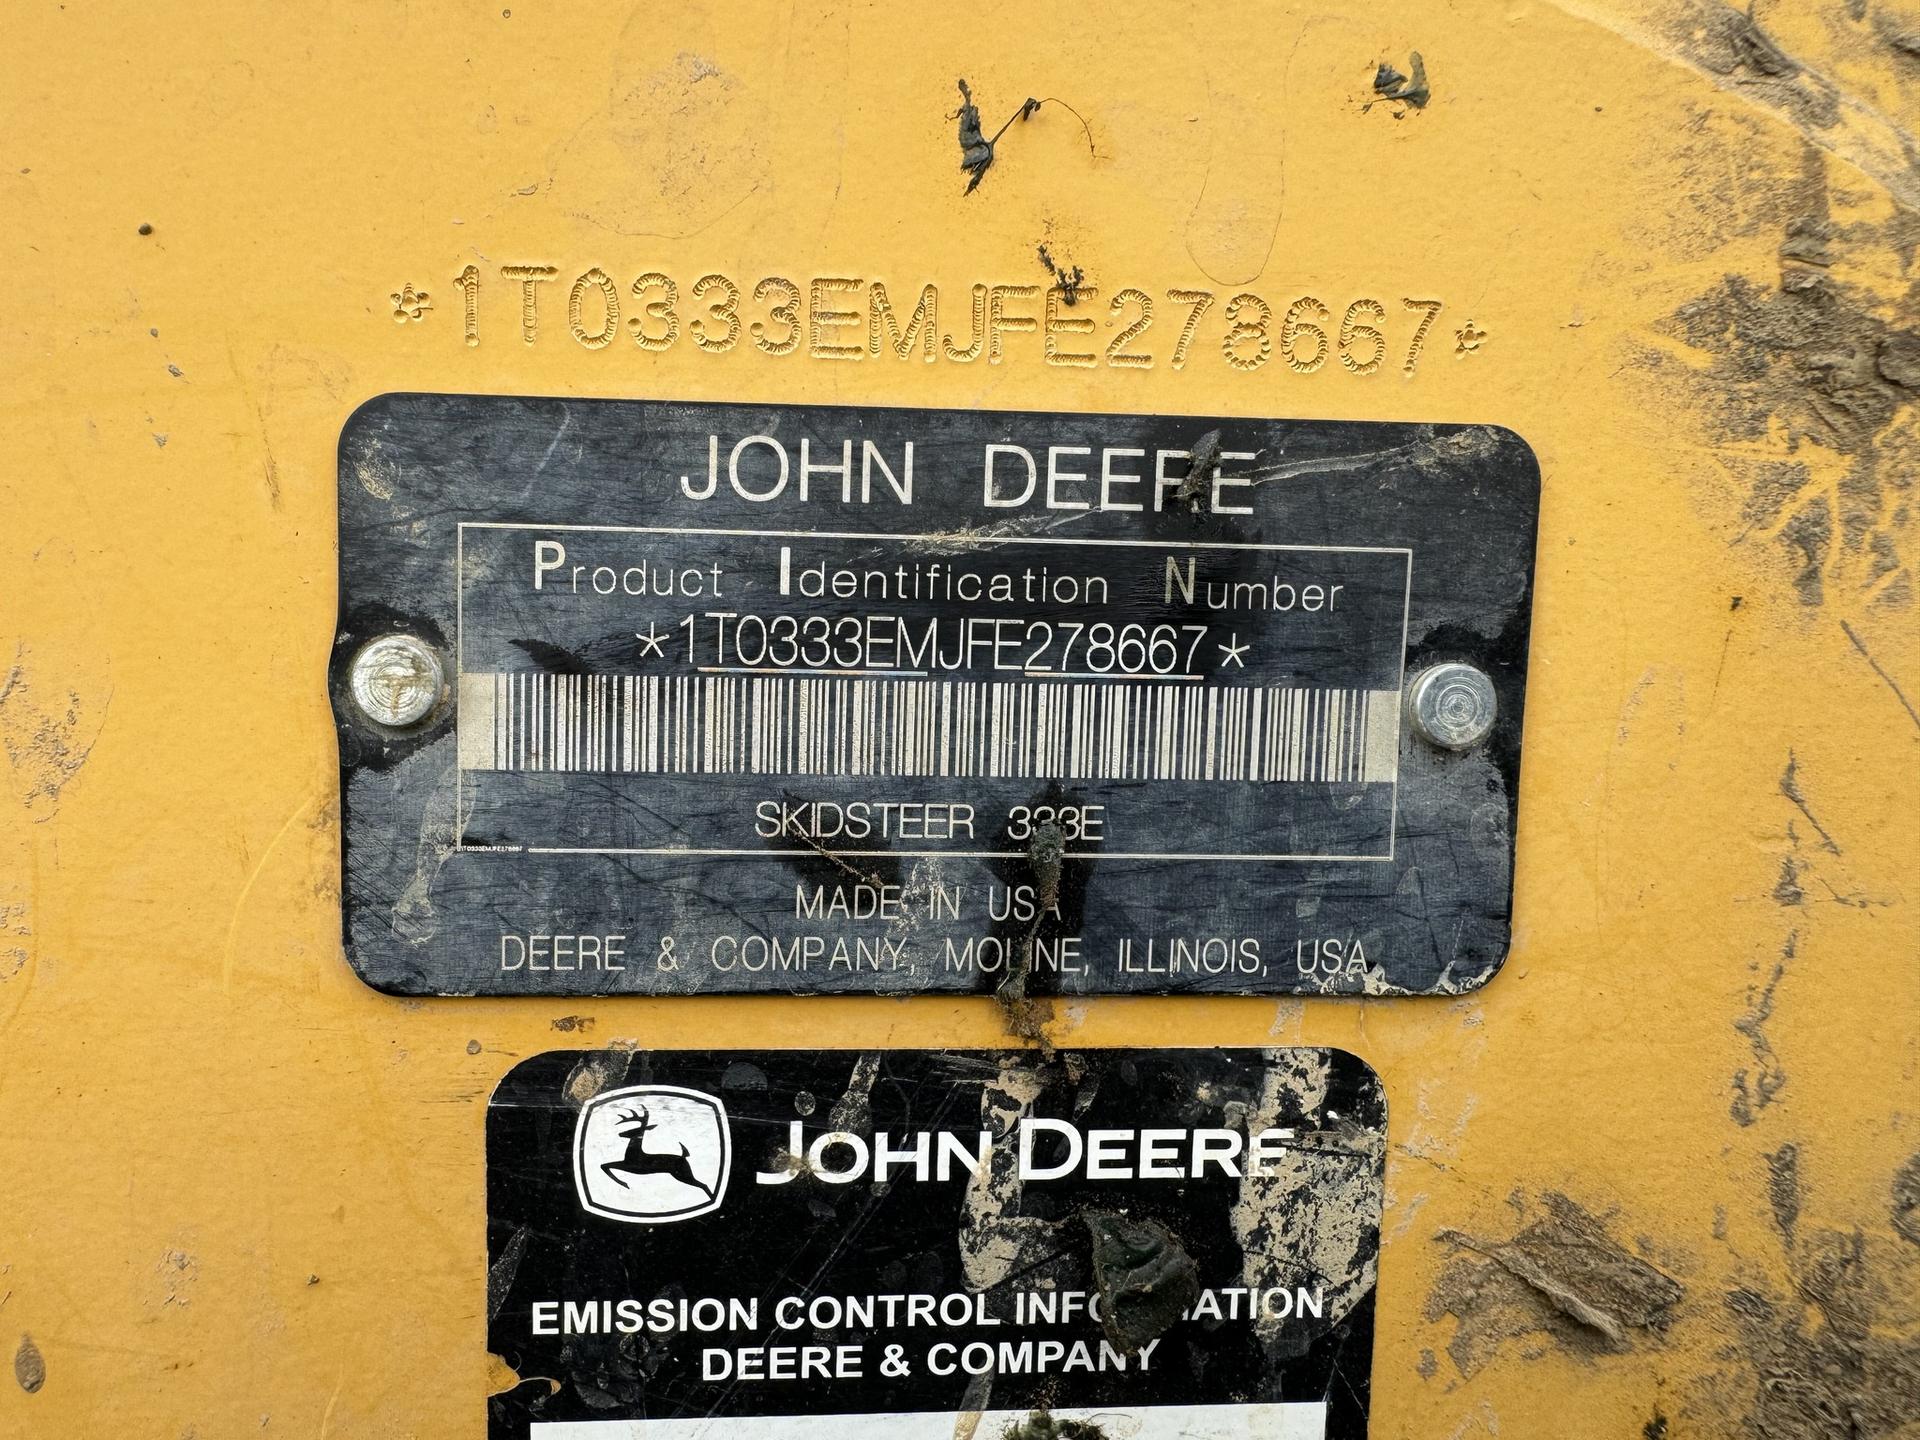 2015 John Deere 333E